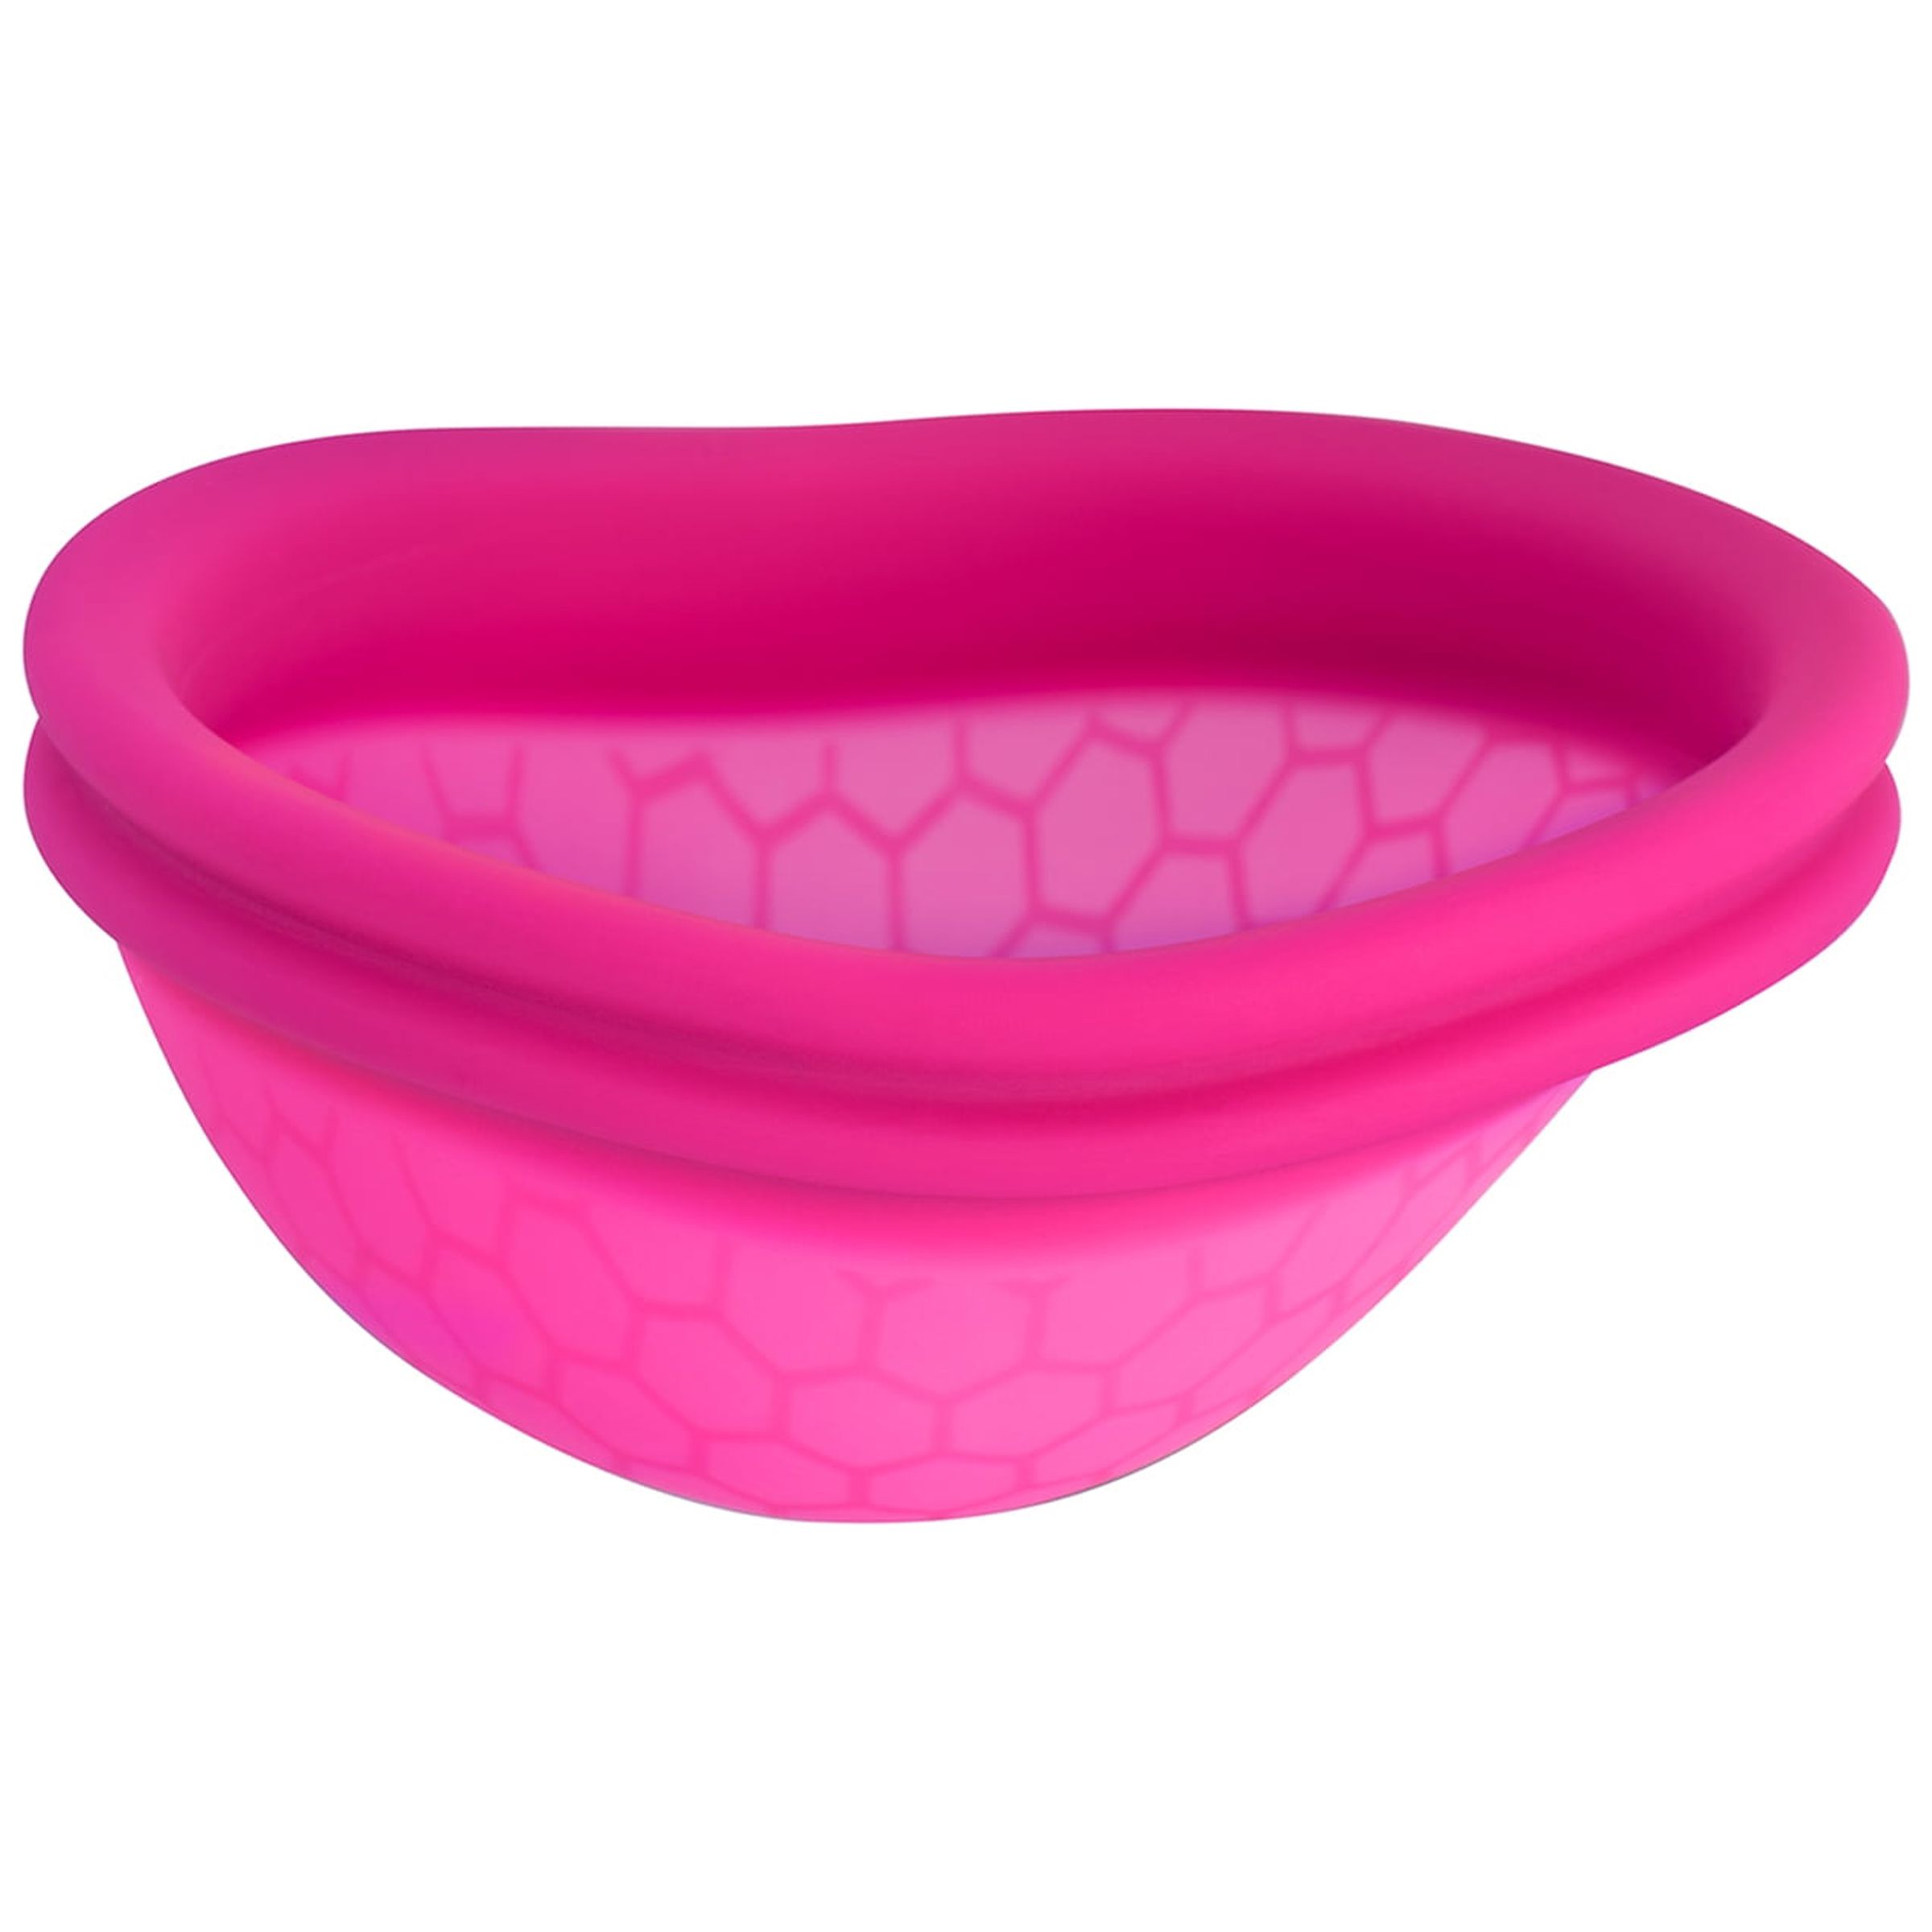 Intimina Ziggy Cup Flat-fit Reusable Menstrual Cup - image 2 of 2